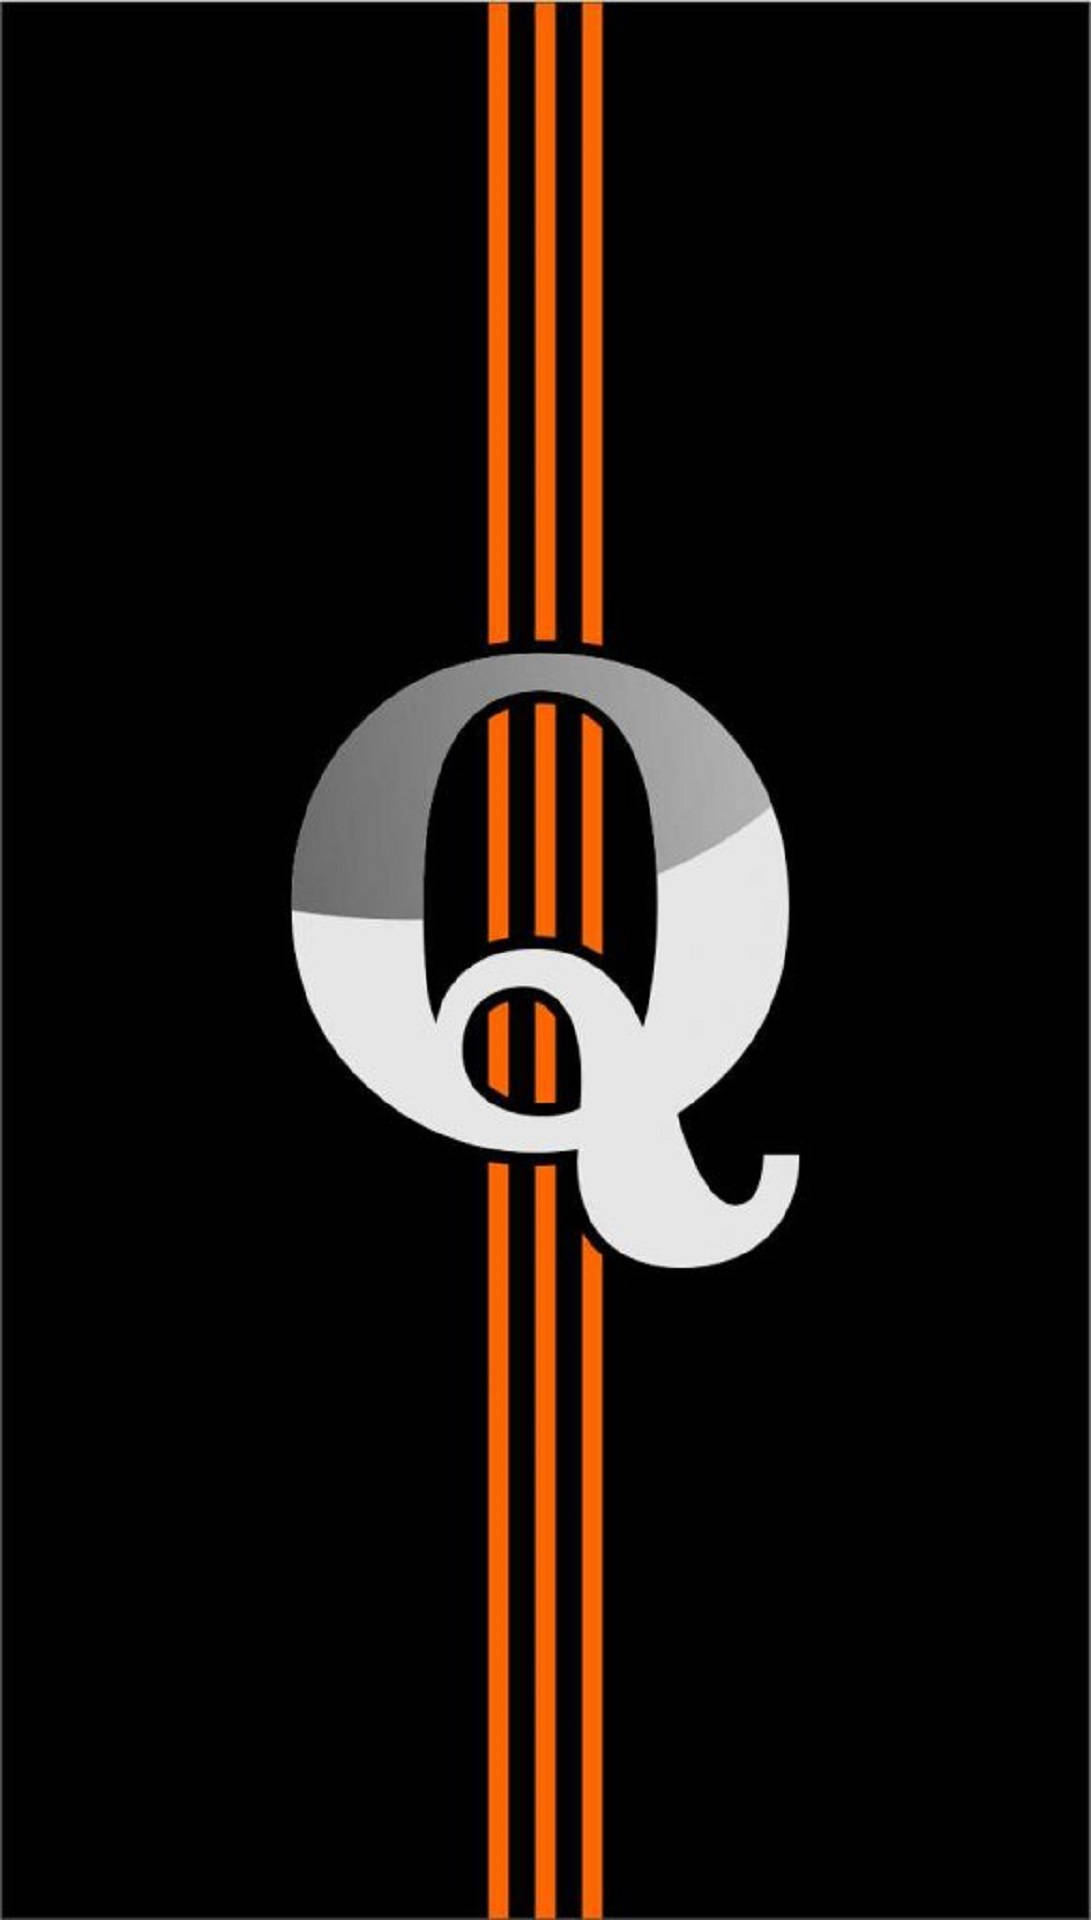 Caption: Vibrant Orange Linear Letter Q Background